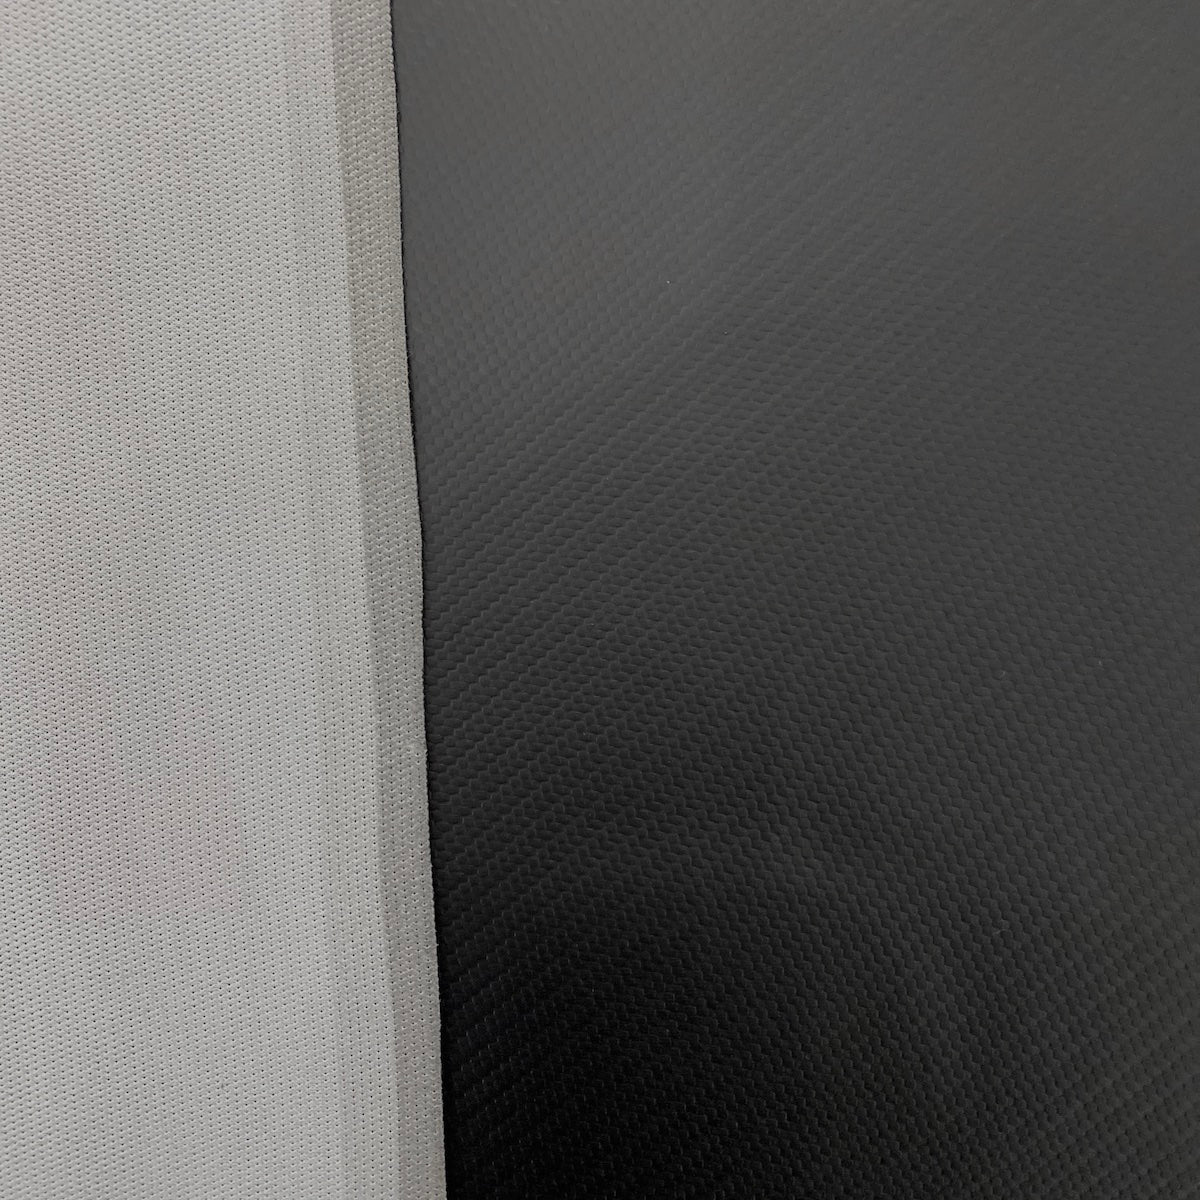 Black Carbon Fiber Marine Vinyl Fabric - Fashion Fabrics LLC